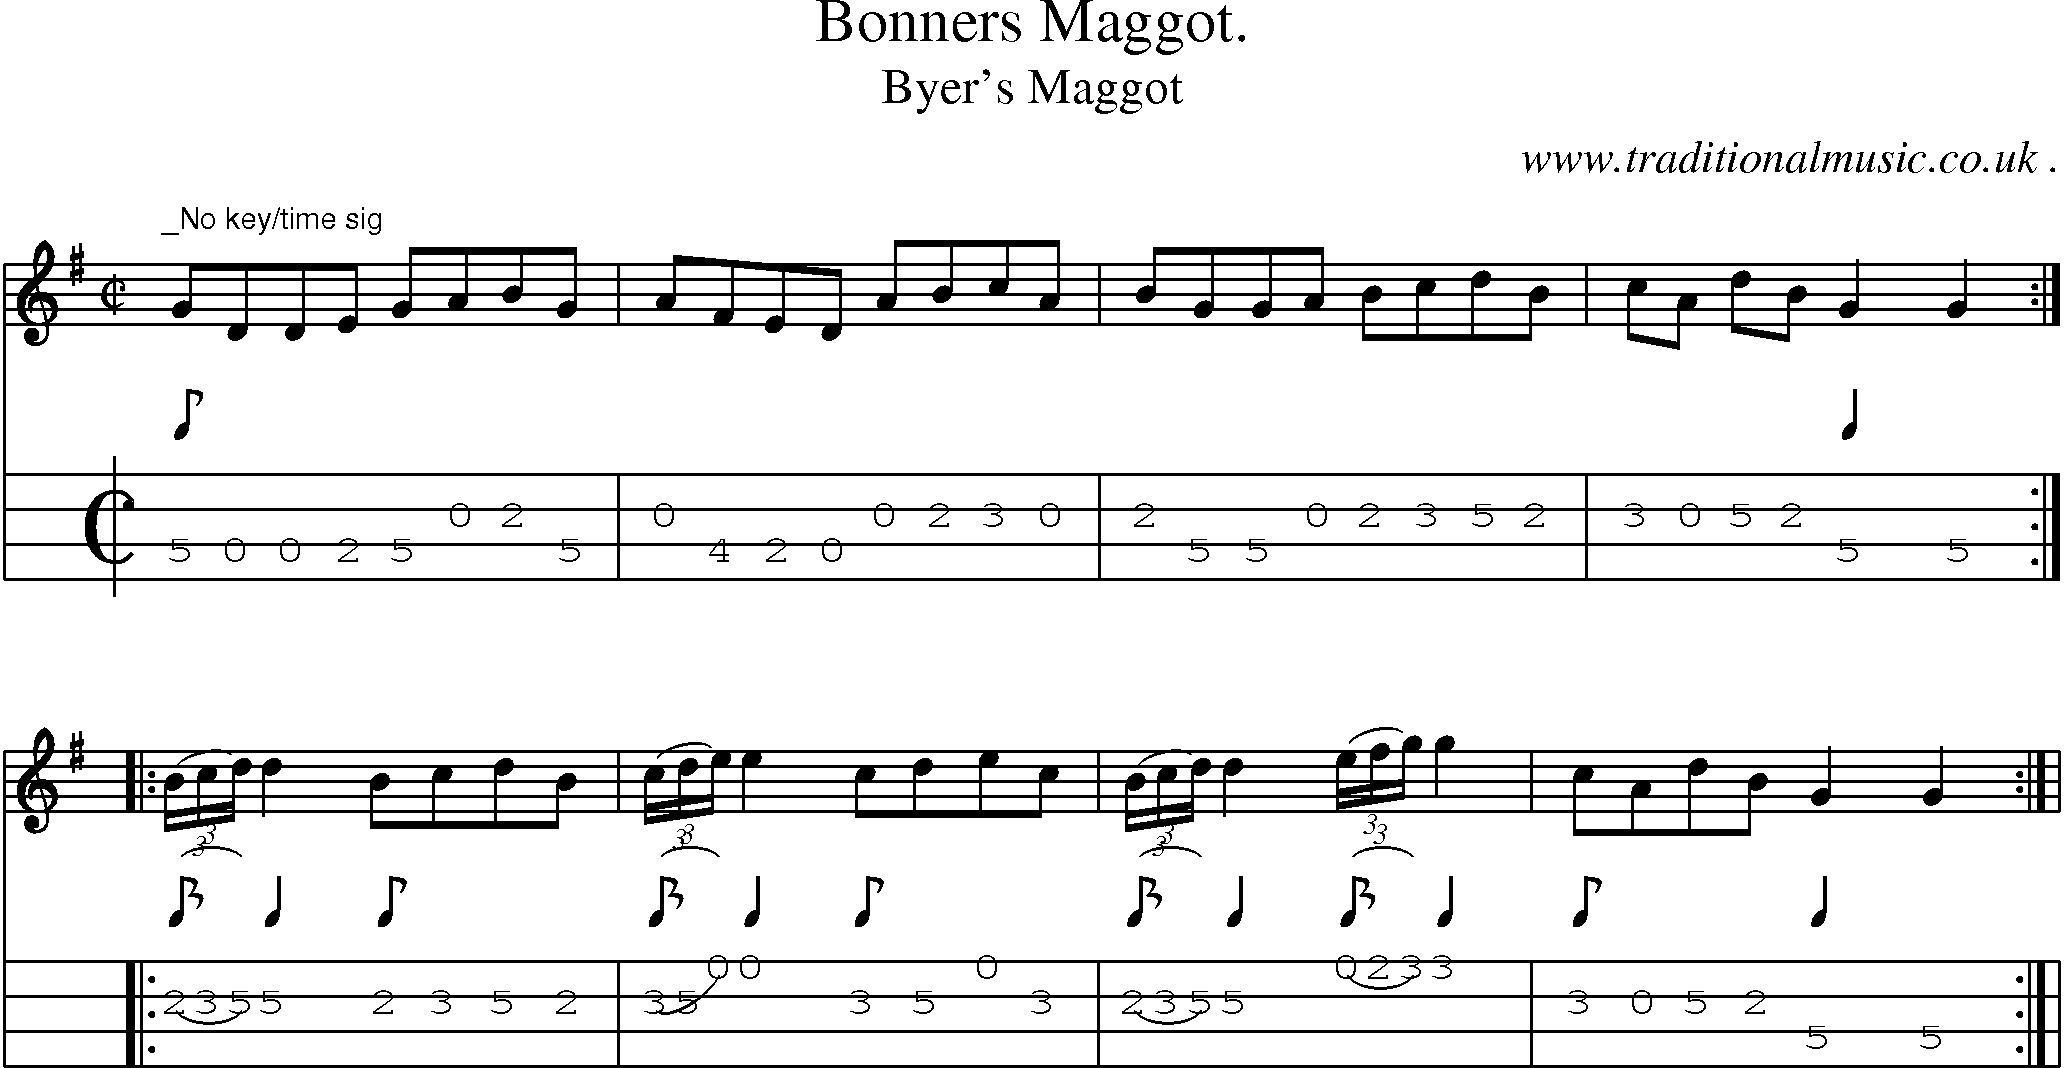 Sheet-Music and Mandolin Tabs for Bonners Maggot